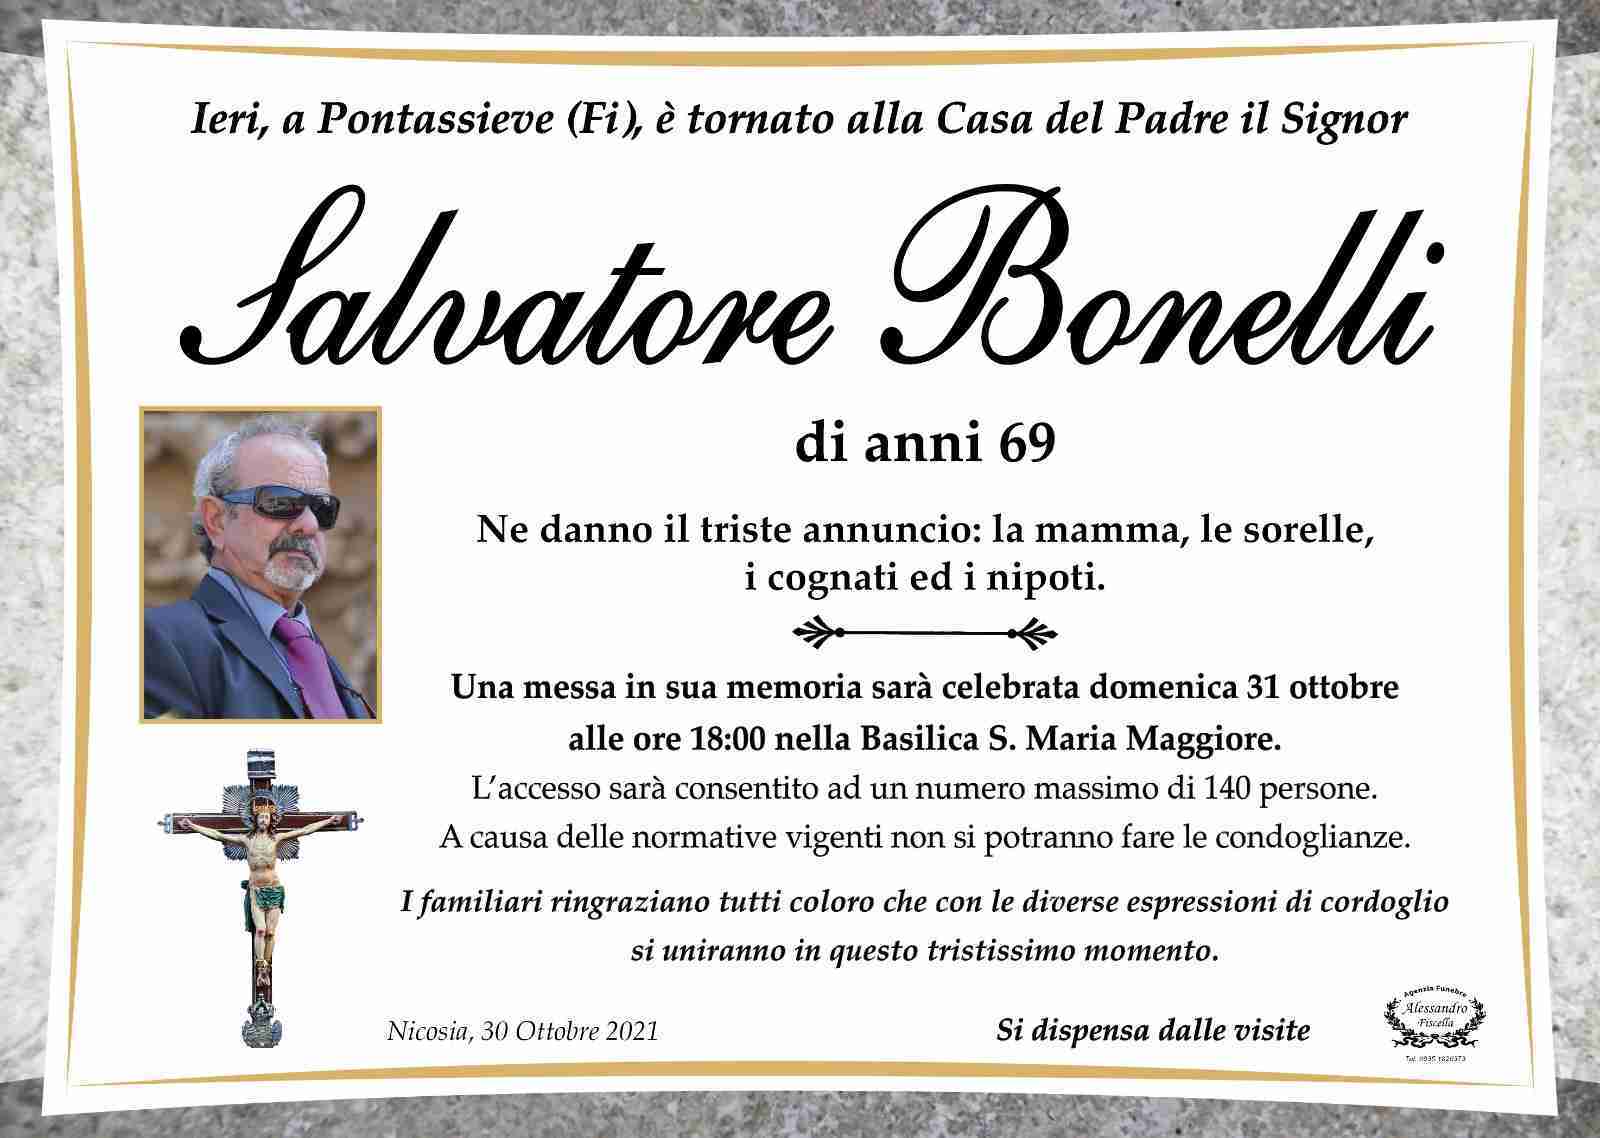 Salvatore Bonelli